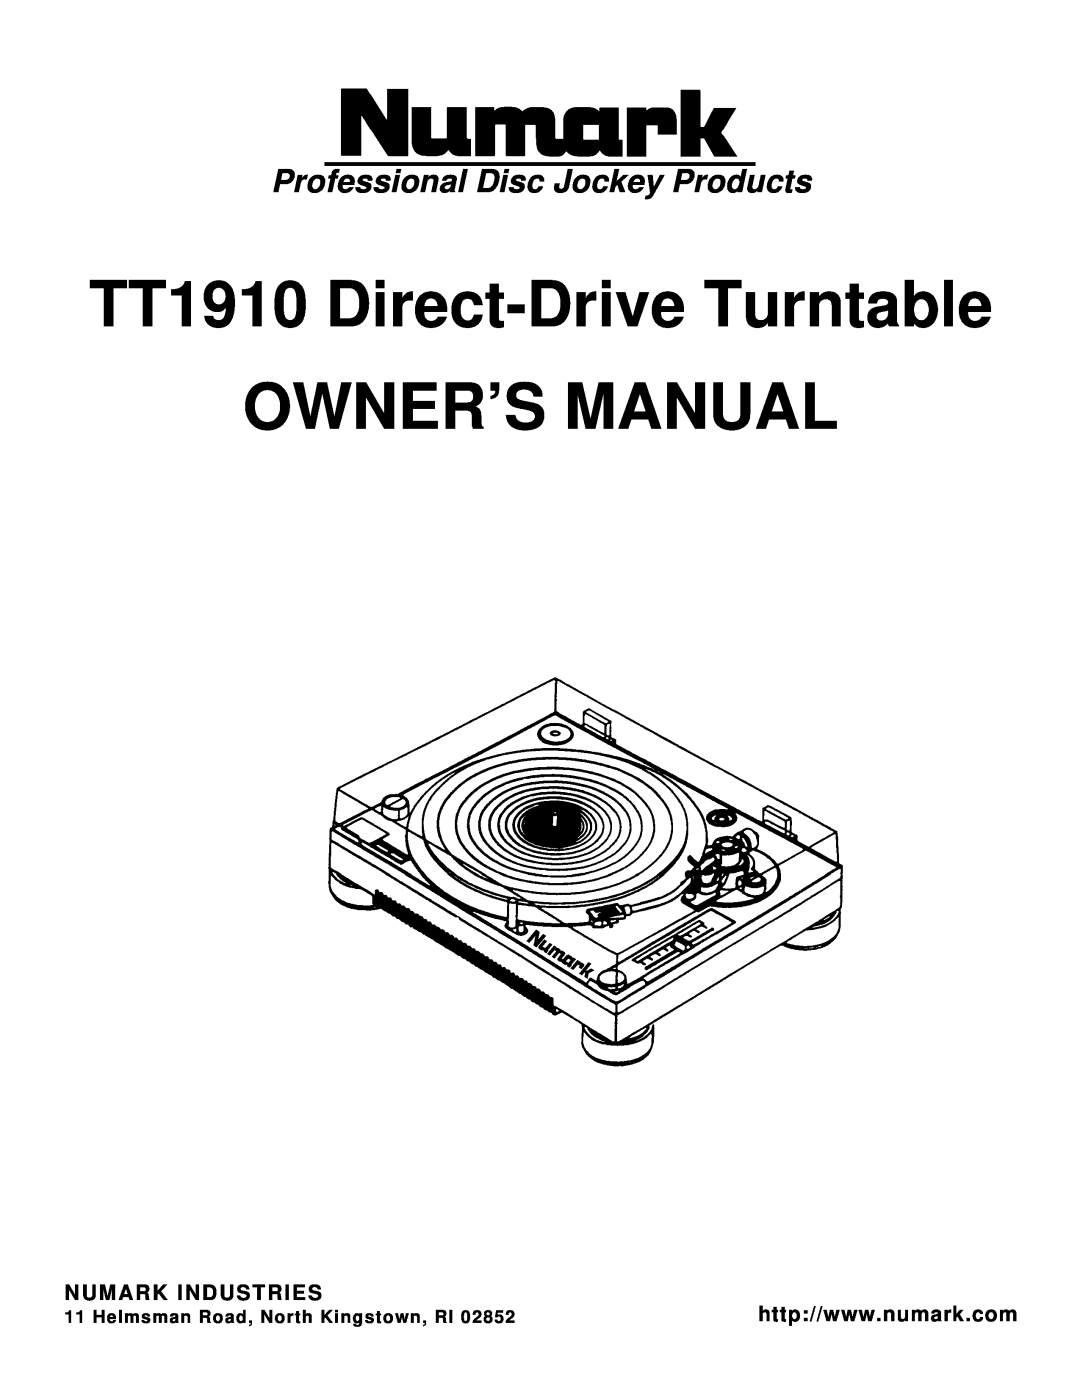 Numark Industries TT1910 owner manual Professional Disc Jockey Products, Helmsman Road, North Kingstown, RI 